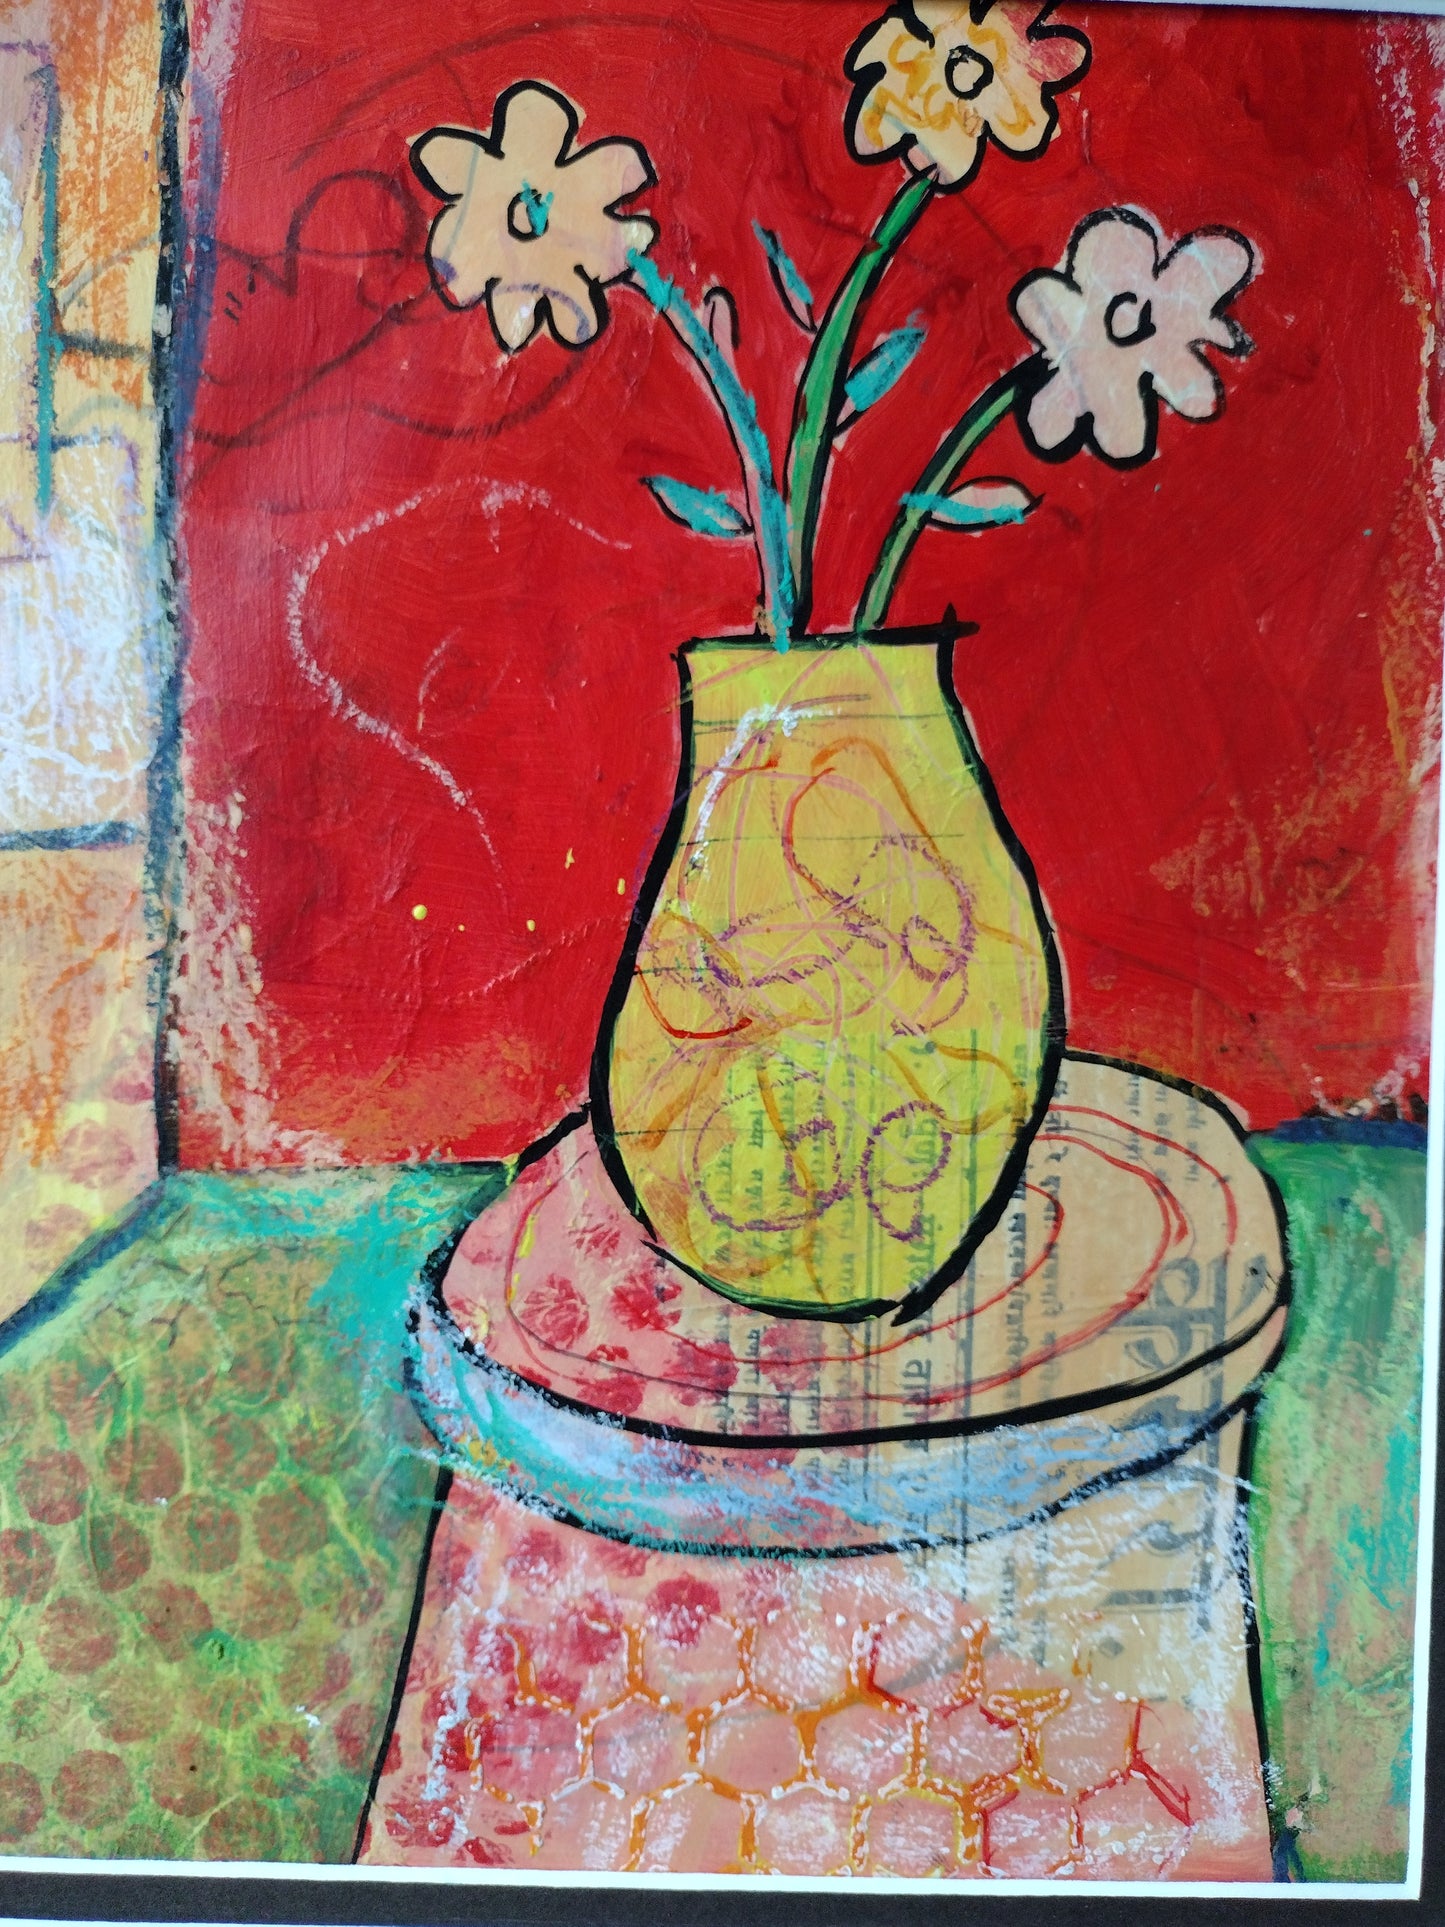 FlowerPot Original work - Sold